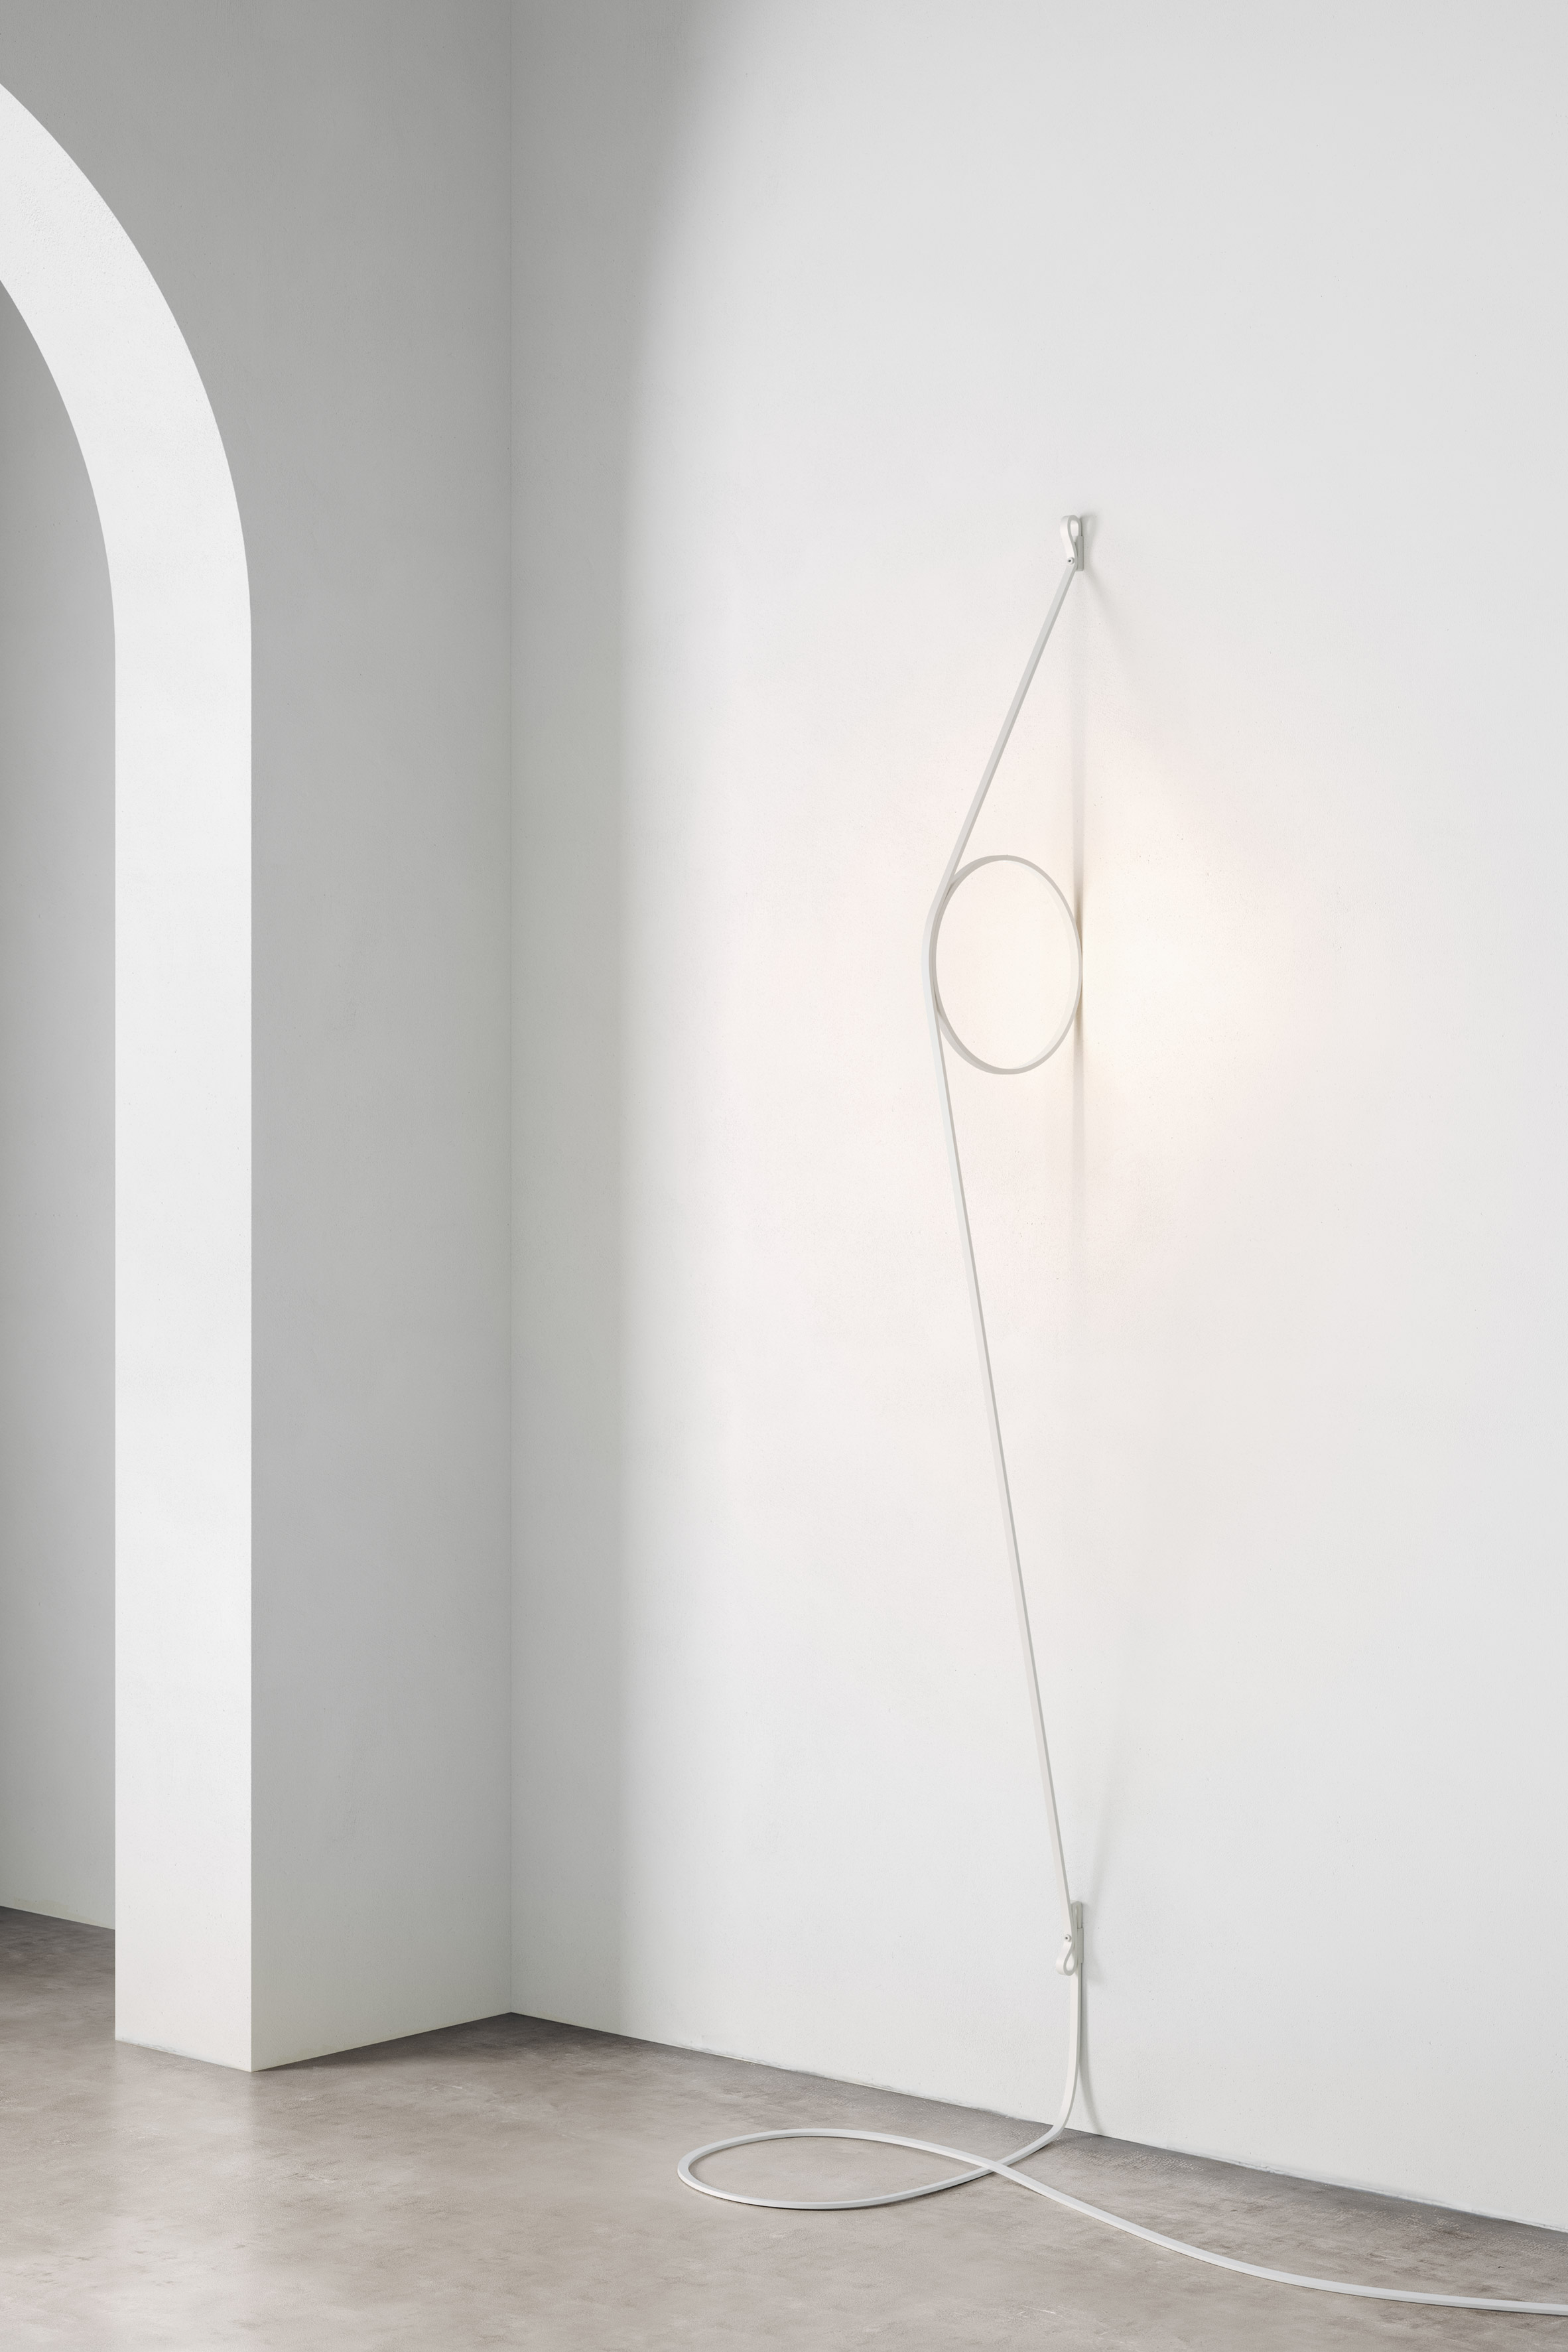 Milan: Blush Lamp and Wire Ring by Formafantasma for FLOS